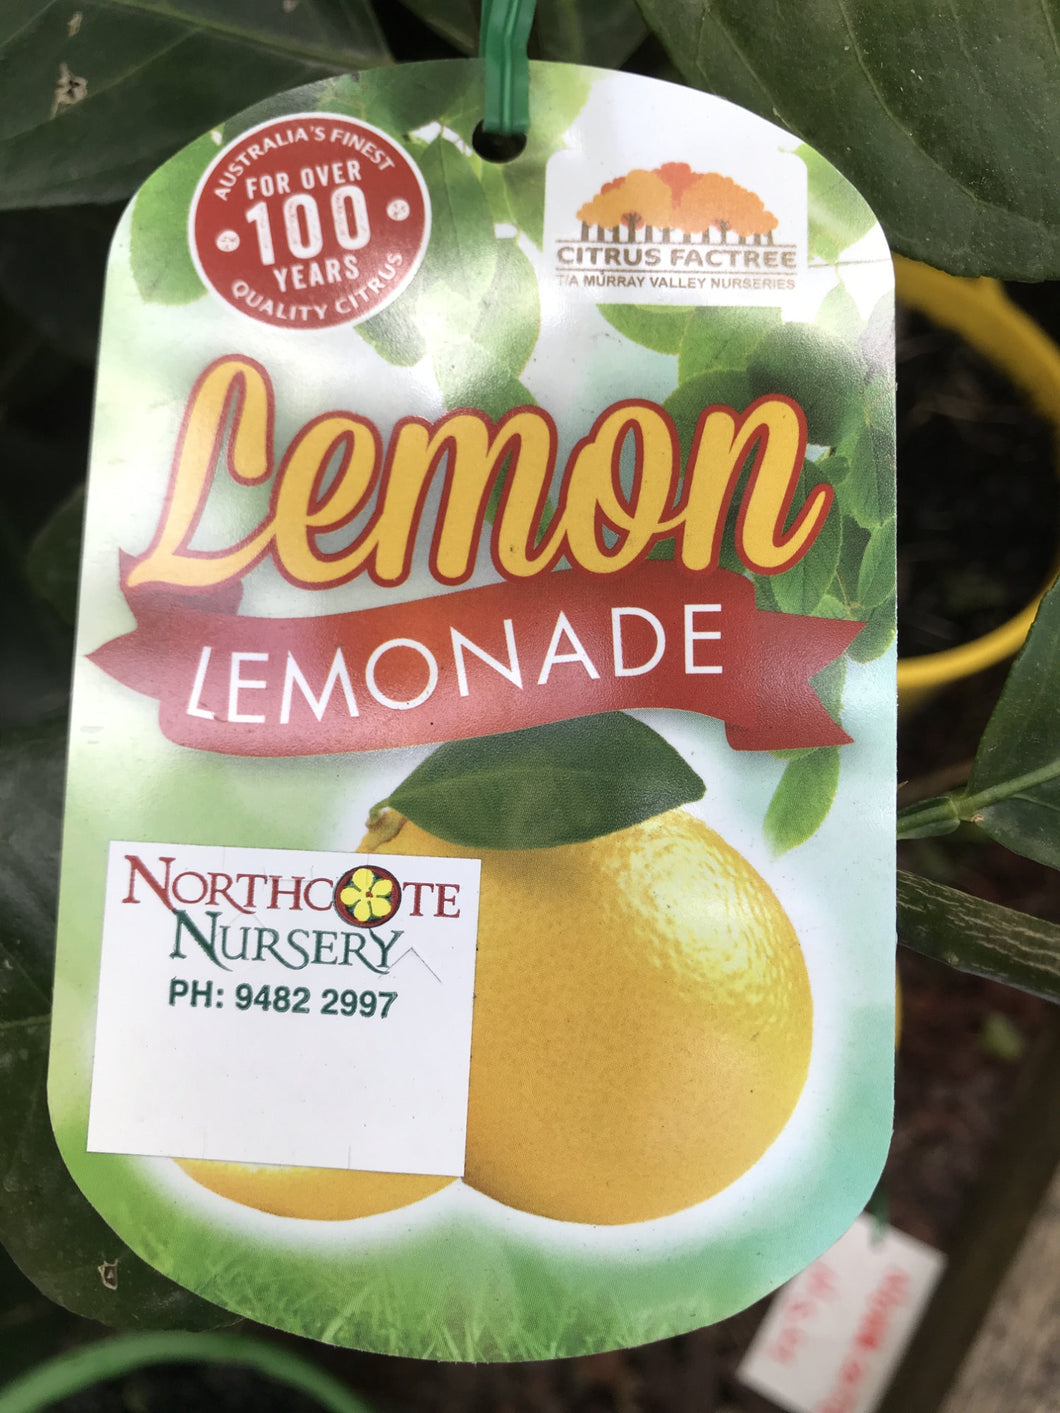 Lemon 'Lemonade'